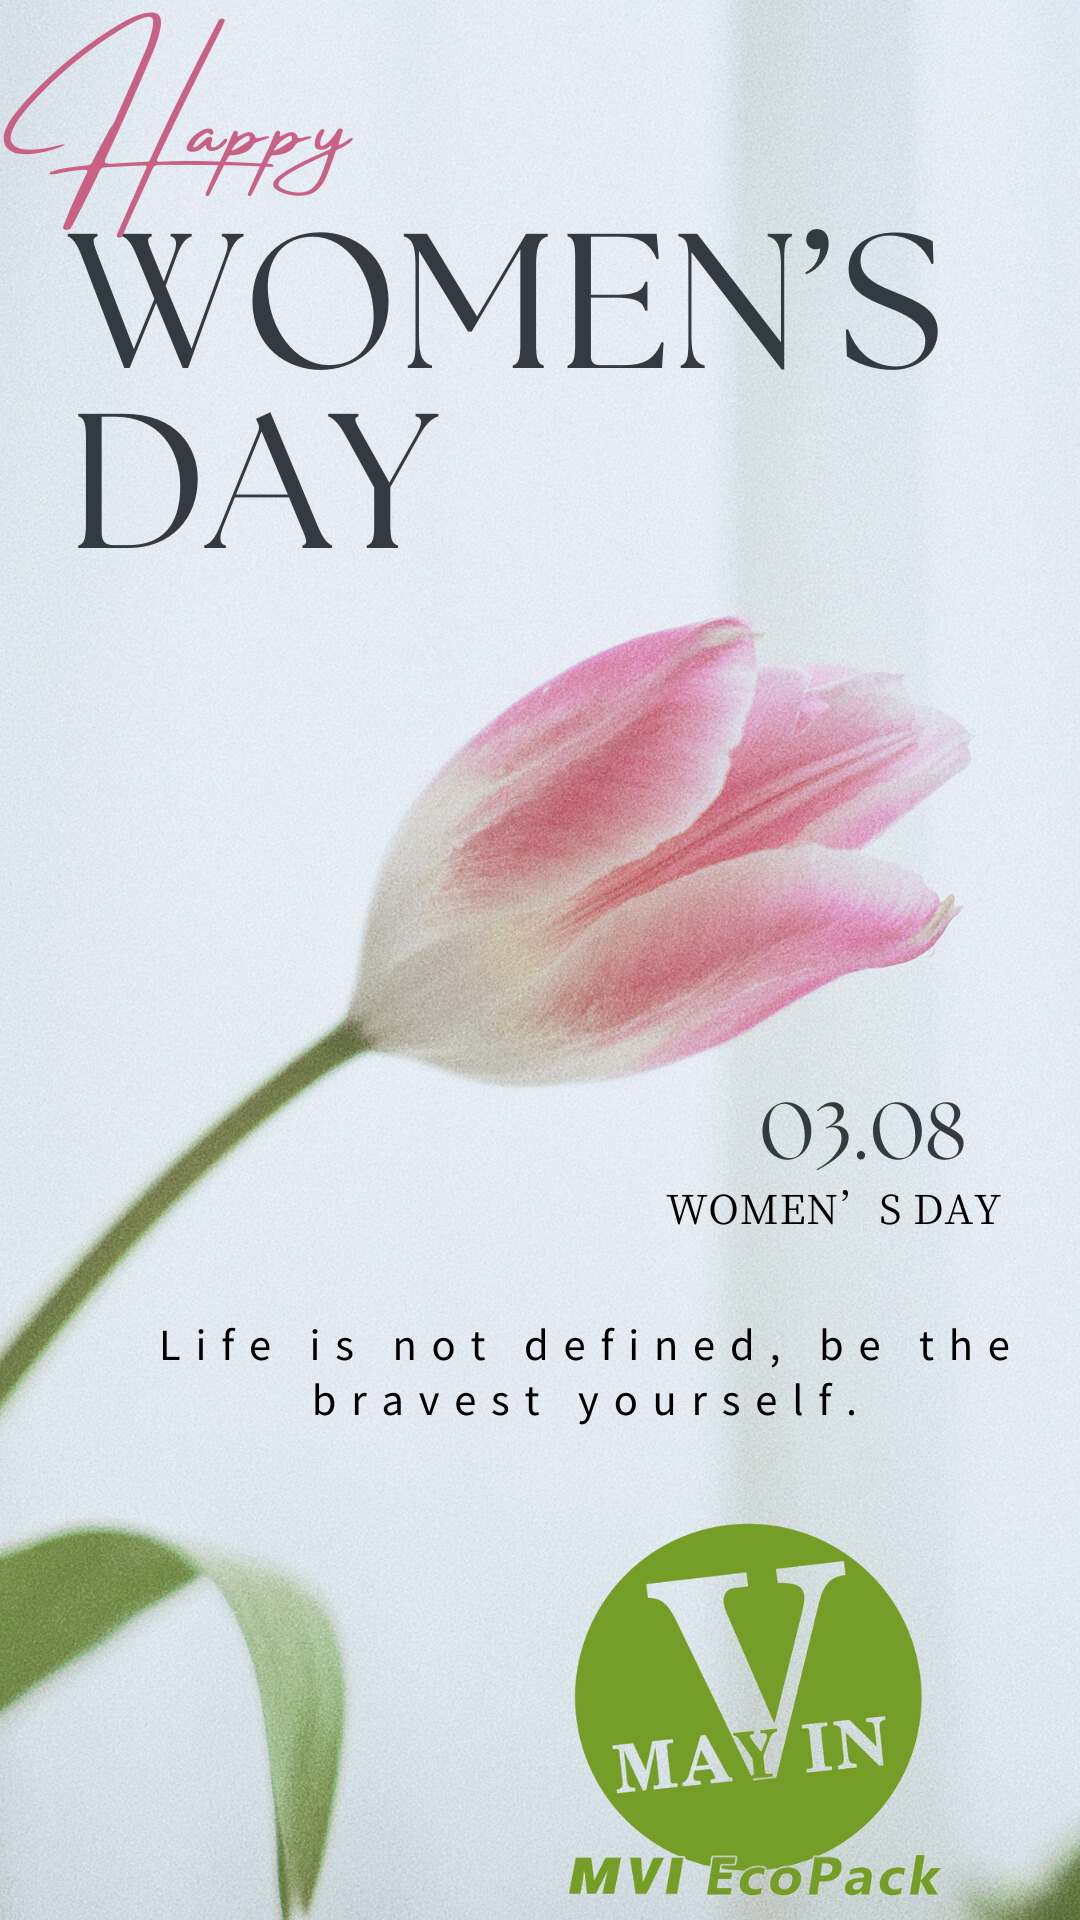 Happy Women’s Day from MVI ECOPACK